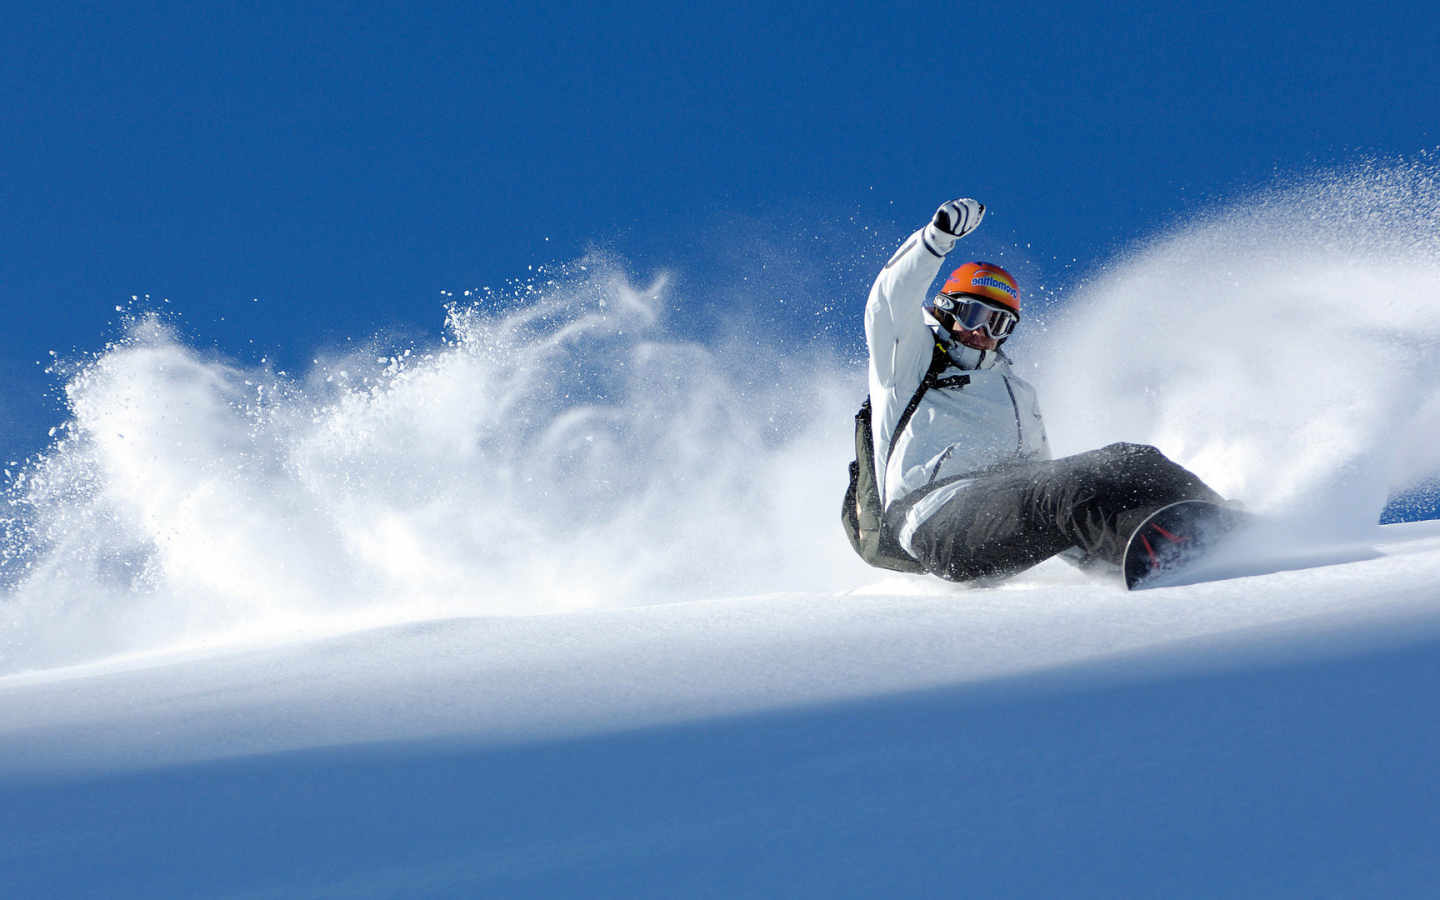 snowboard, mountains, winter, snow, snowboarding, snowboarder, sport, downhill